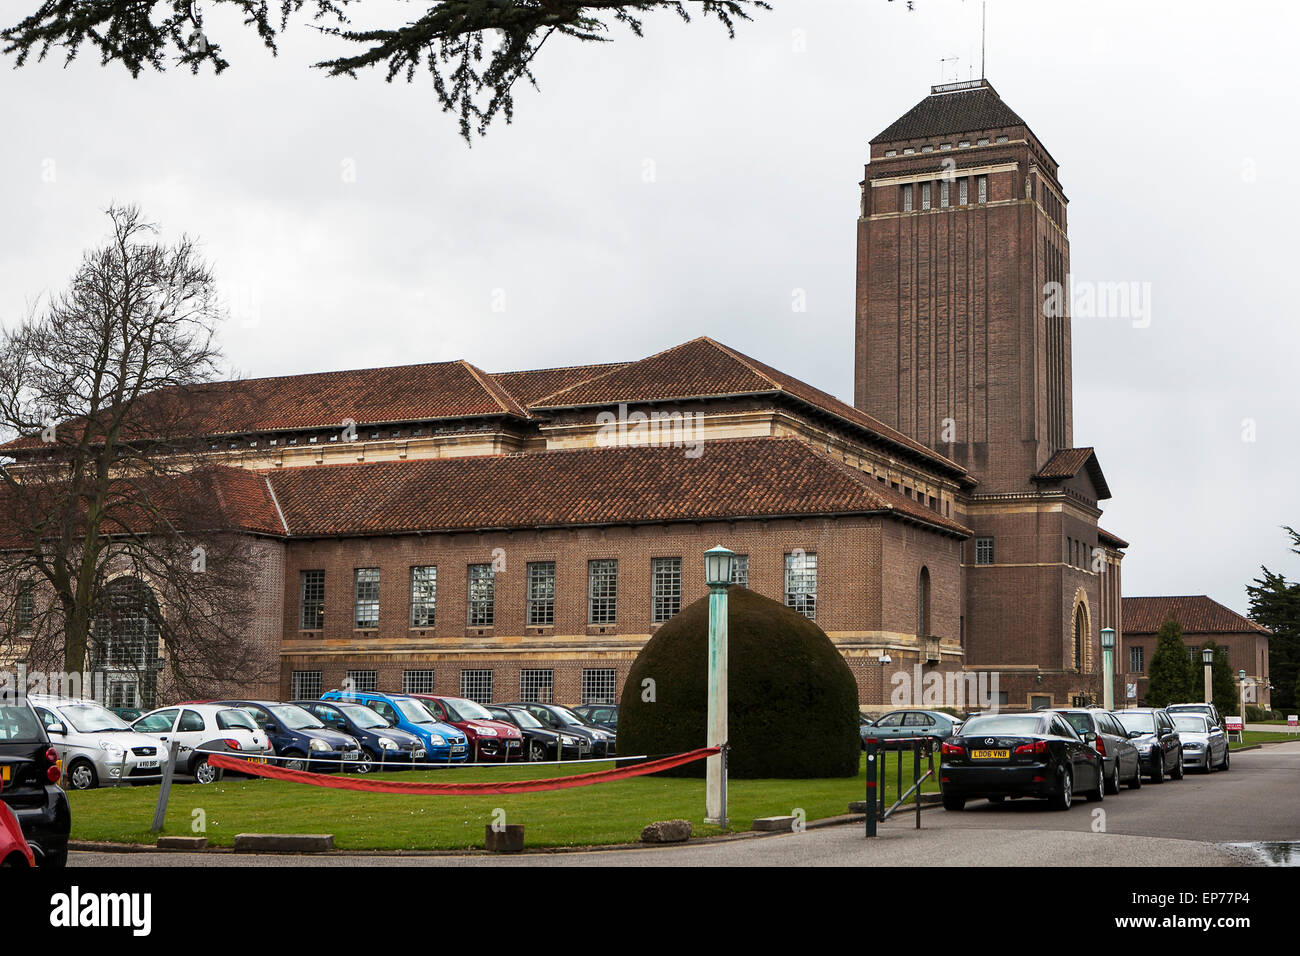 Cambridge, UK - April 22, 2015: Symmetry Cambridge University Library - University of Cambridge. Stock Photo